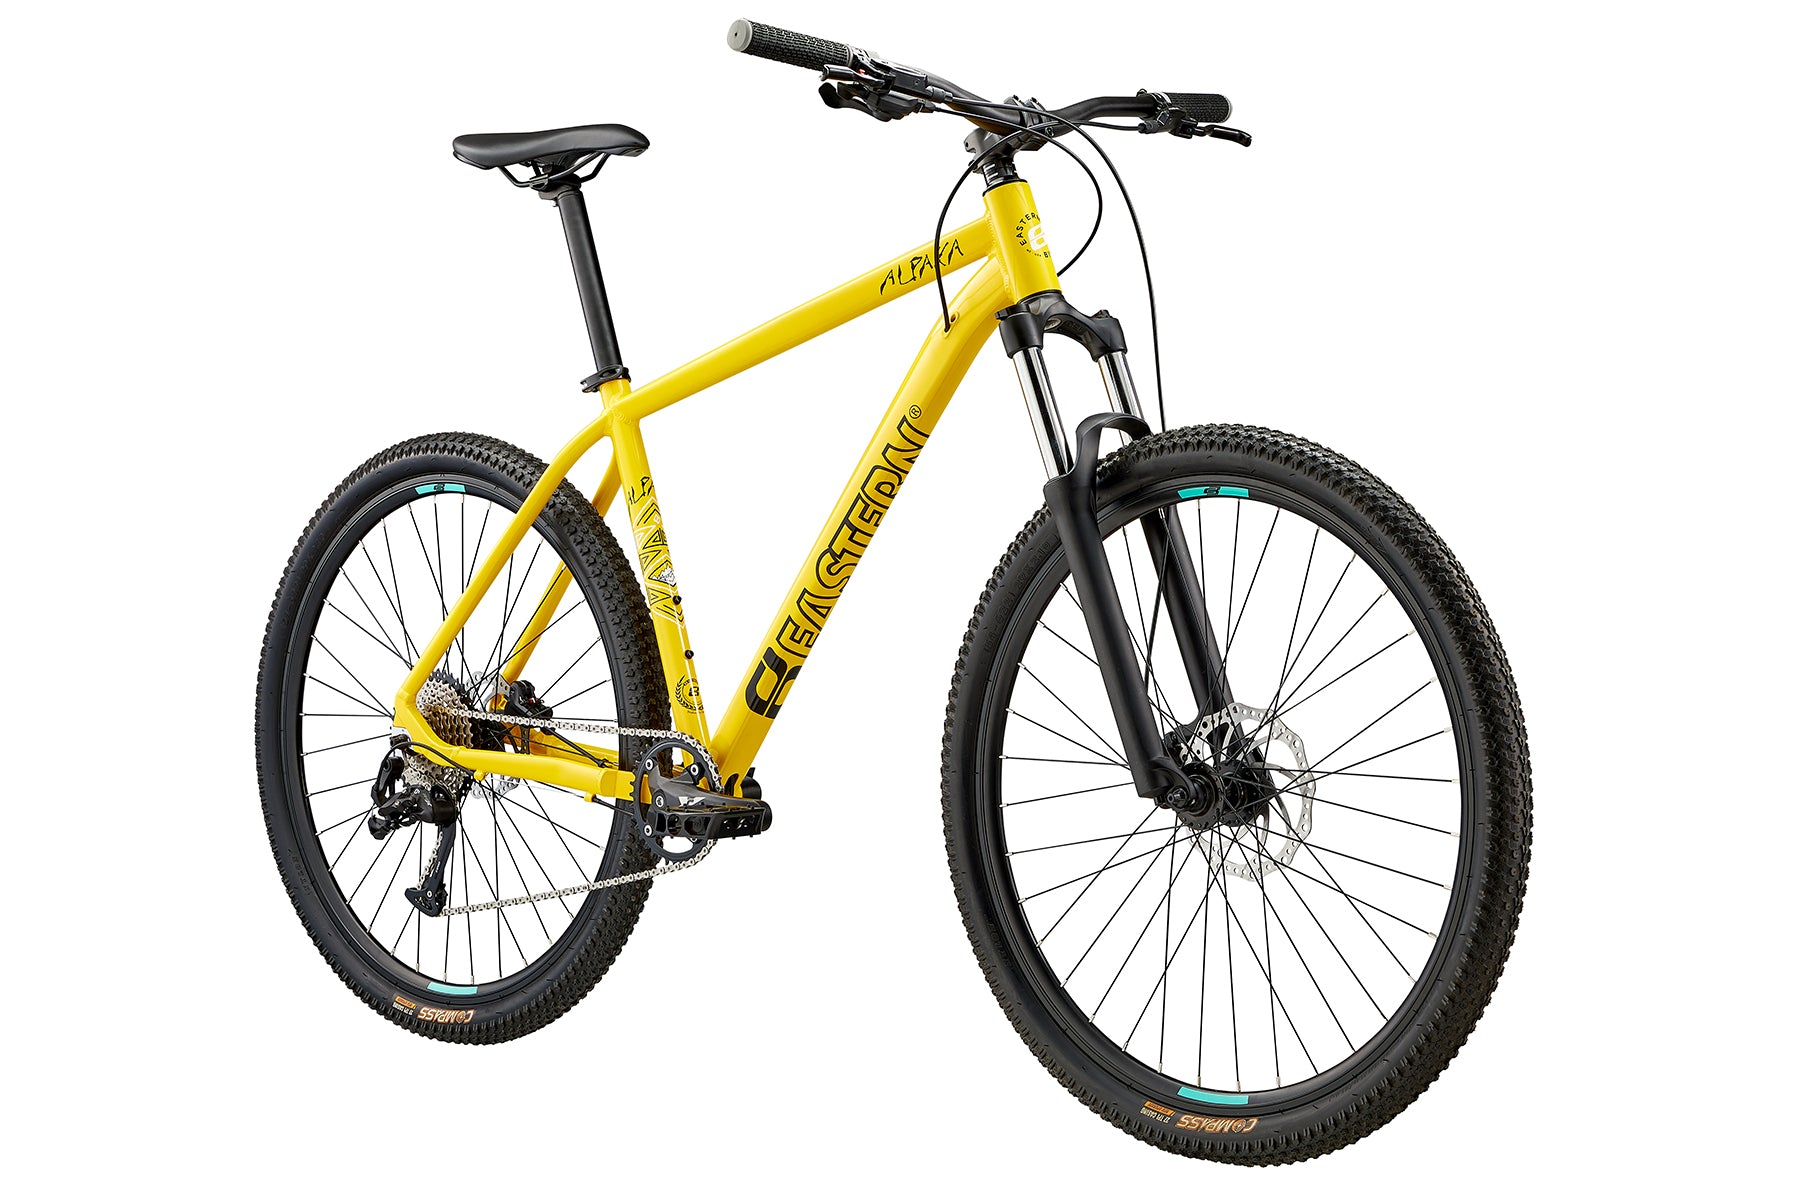 Eastern Alpaka 29 MTB Hardtail Bike - Yellow